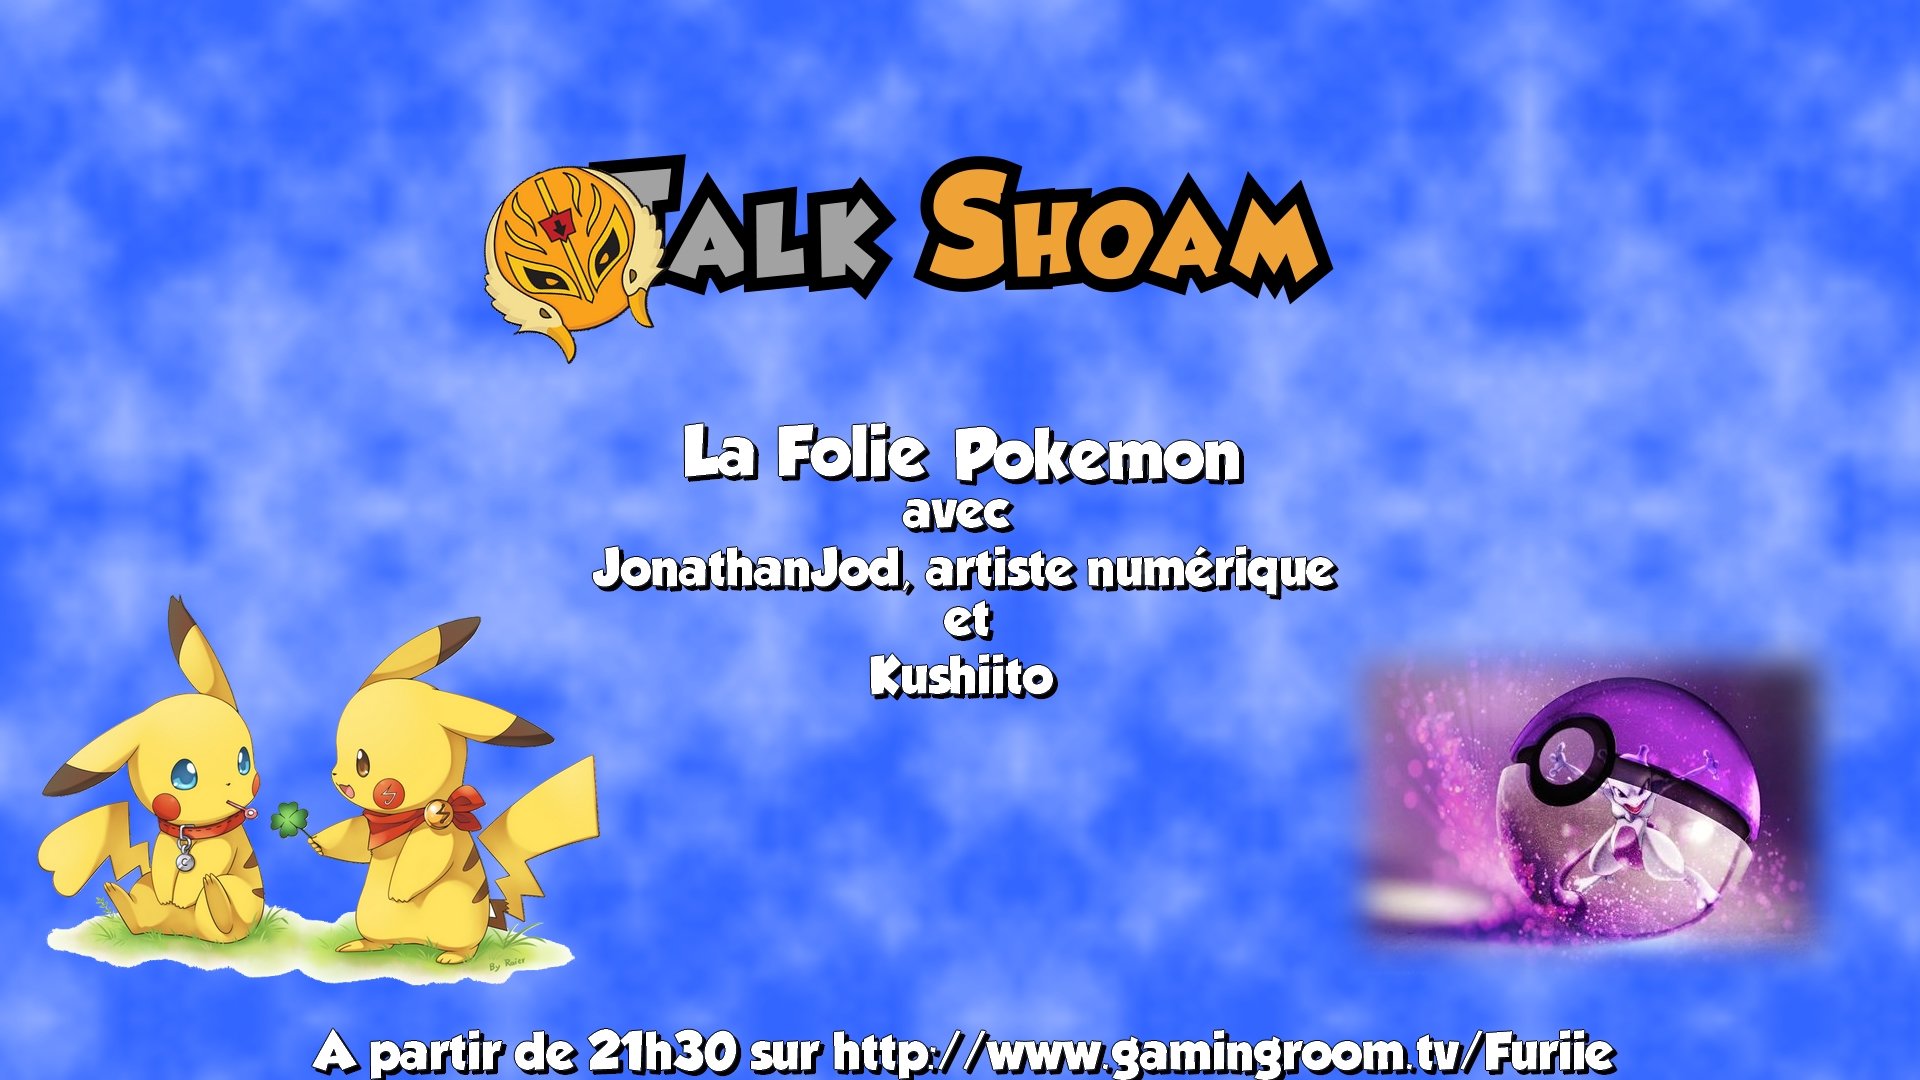 TalkShoam #4 "La Folie Pokémon"